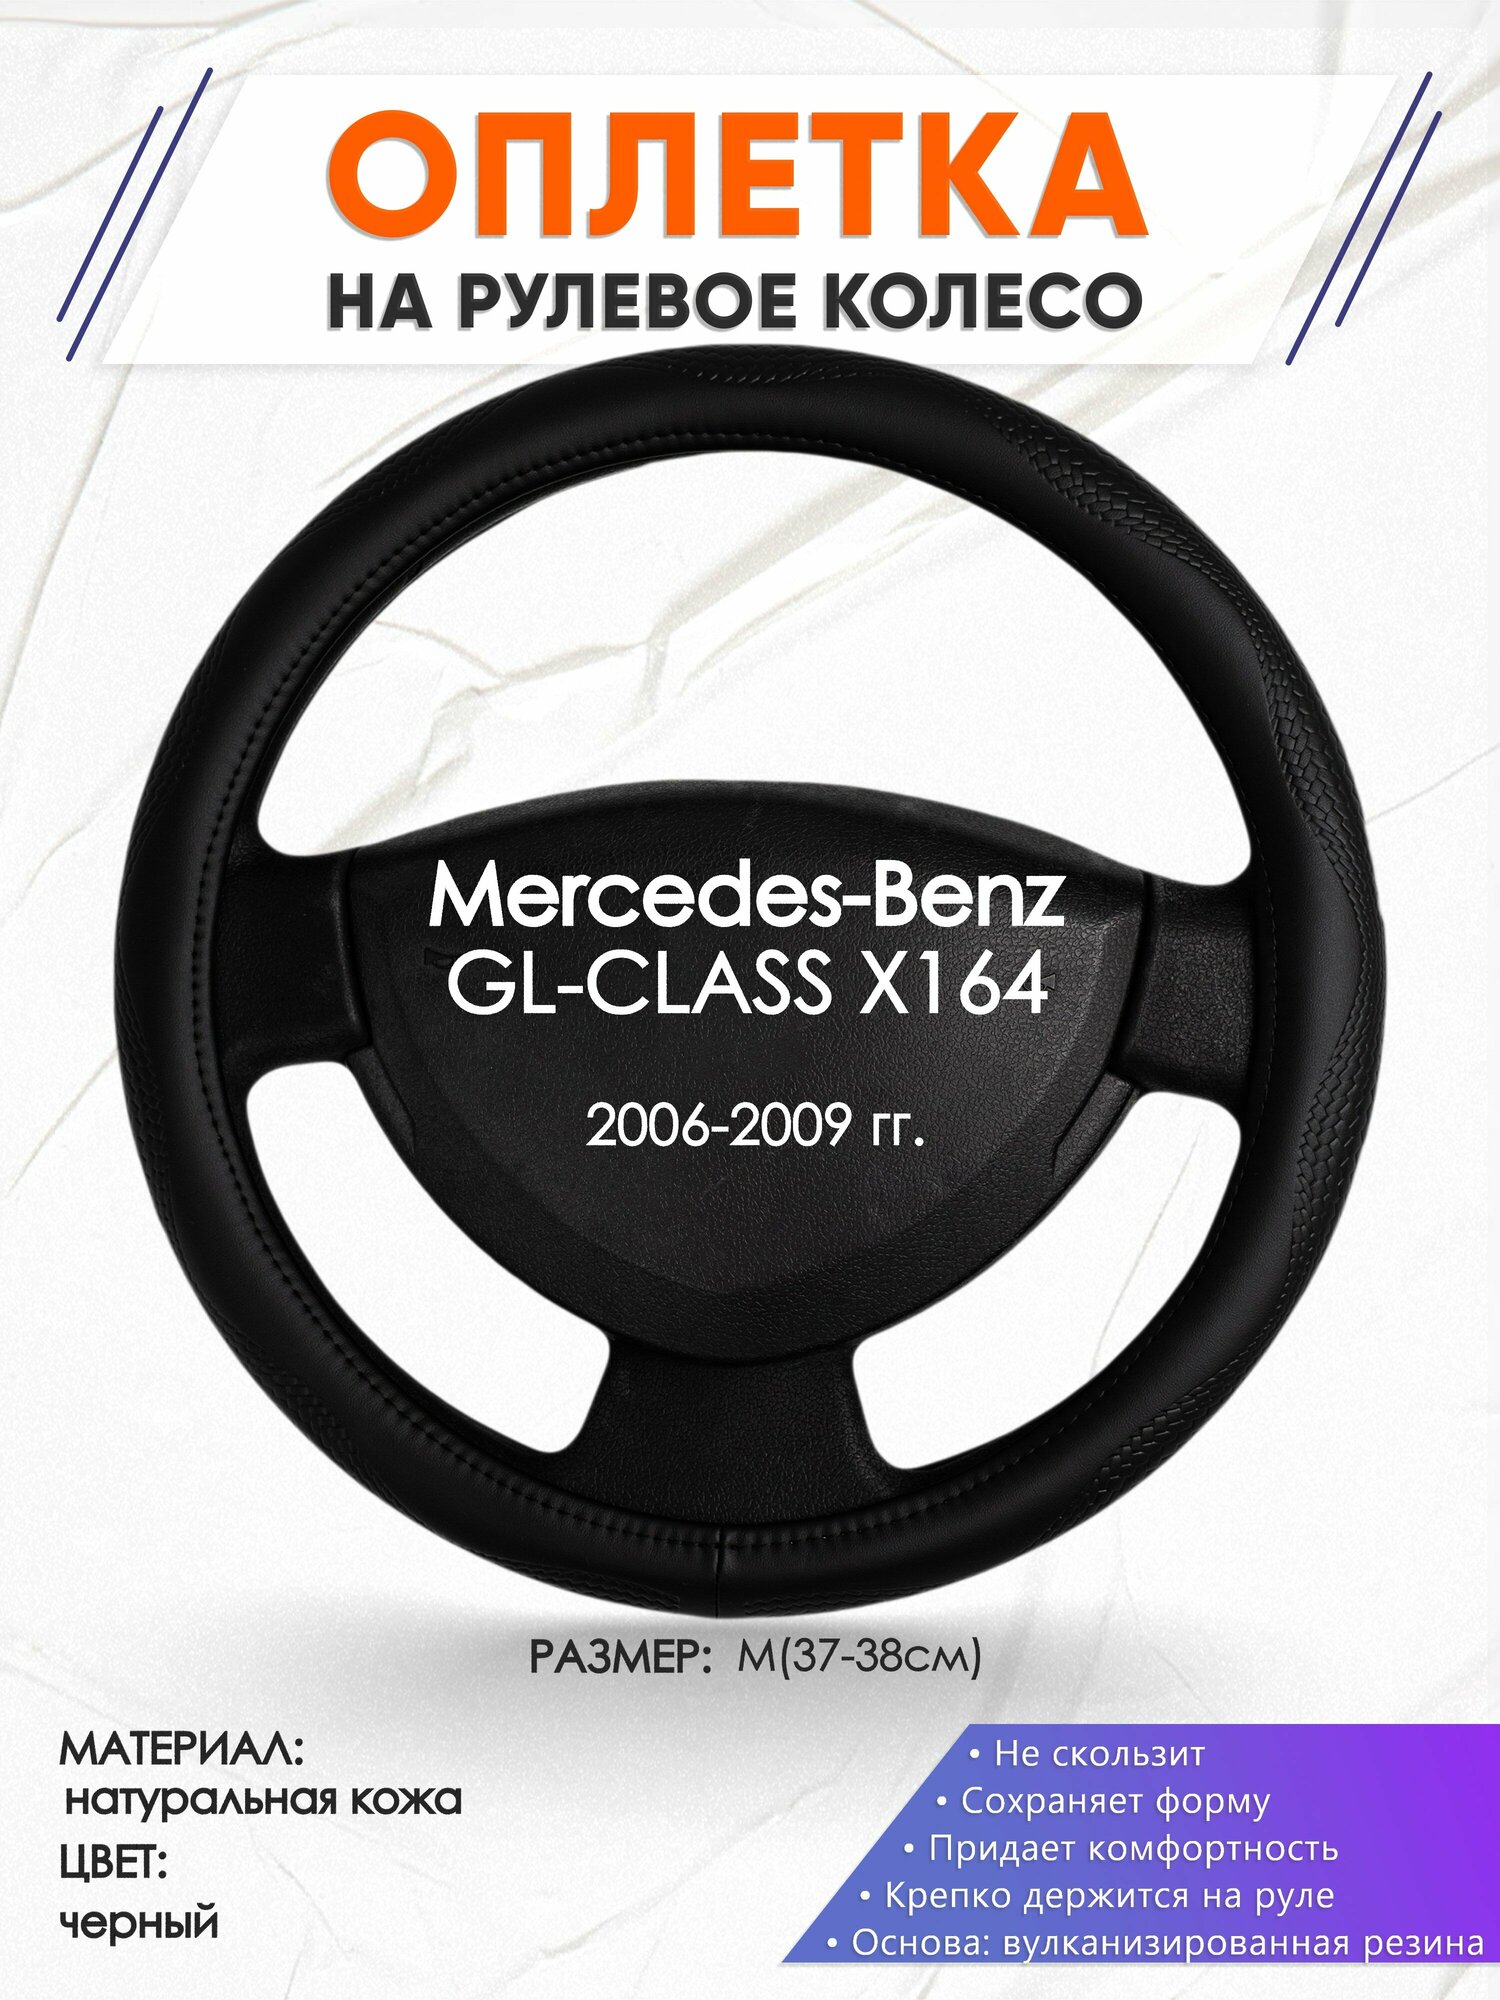 Оплетка наруль для Mercedes-Benz GL-CLASS X164(Мерседес Бенц ГЛ Класс Х164) 2006-2009 годов выпуска, размер M(37-38см), Натуральная кожа 32